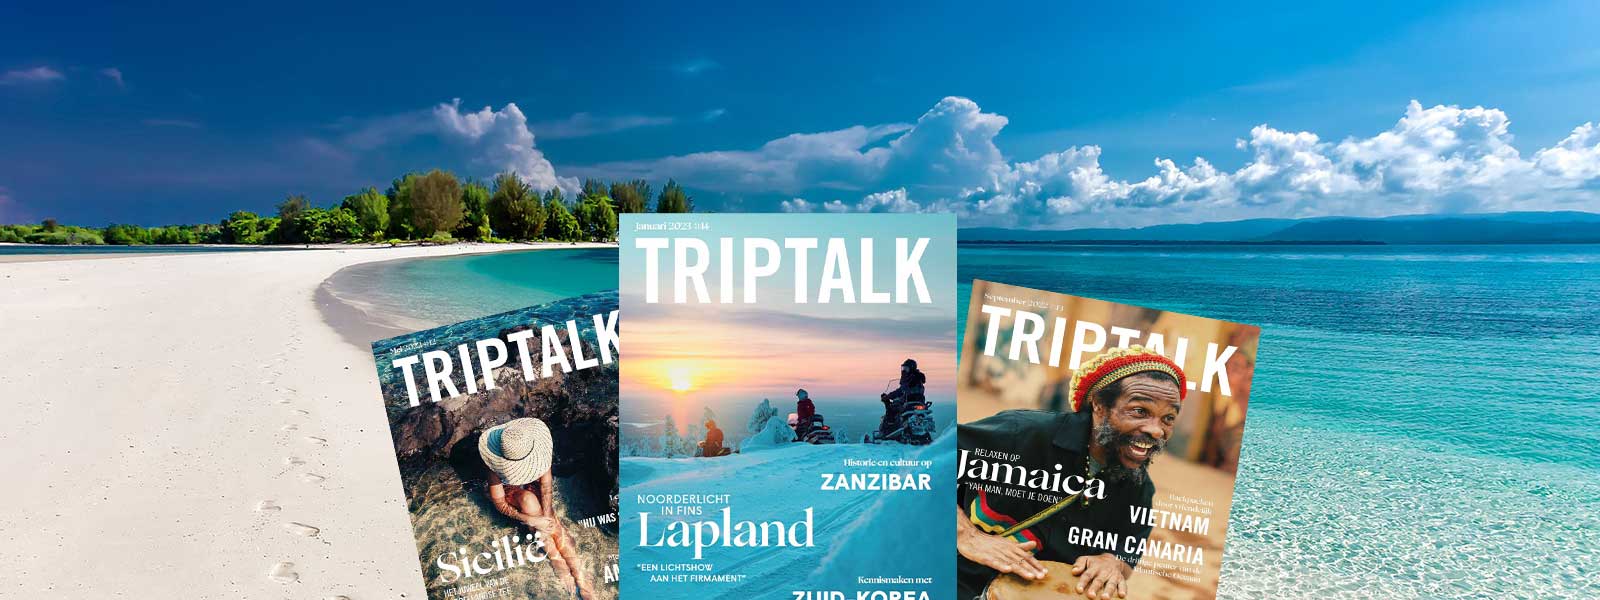 TripTalk reismagazine met nummer14